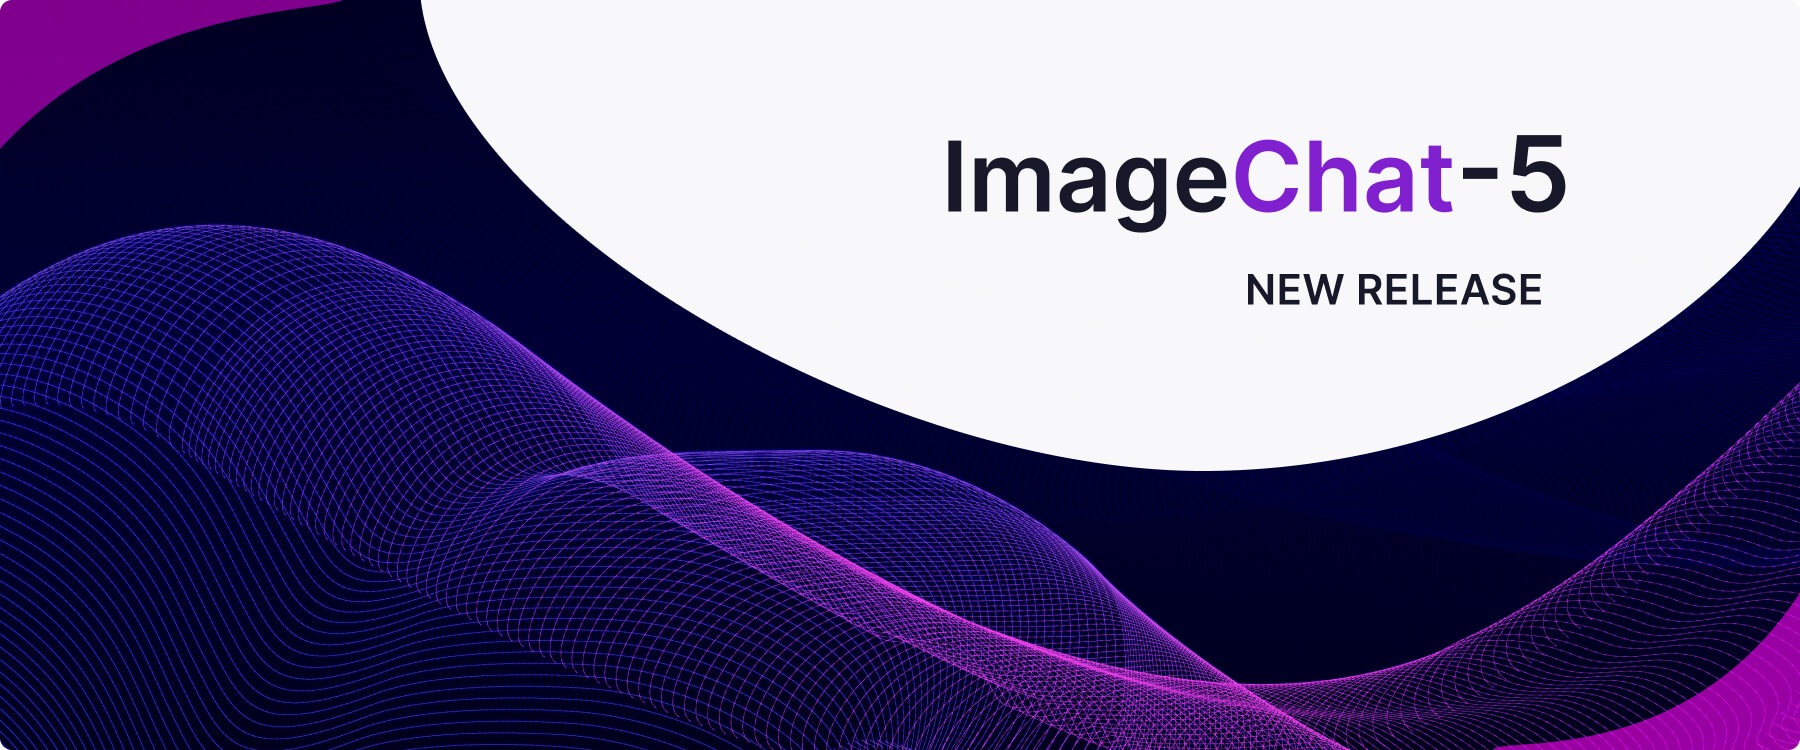 ImageChat-5 New Release